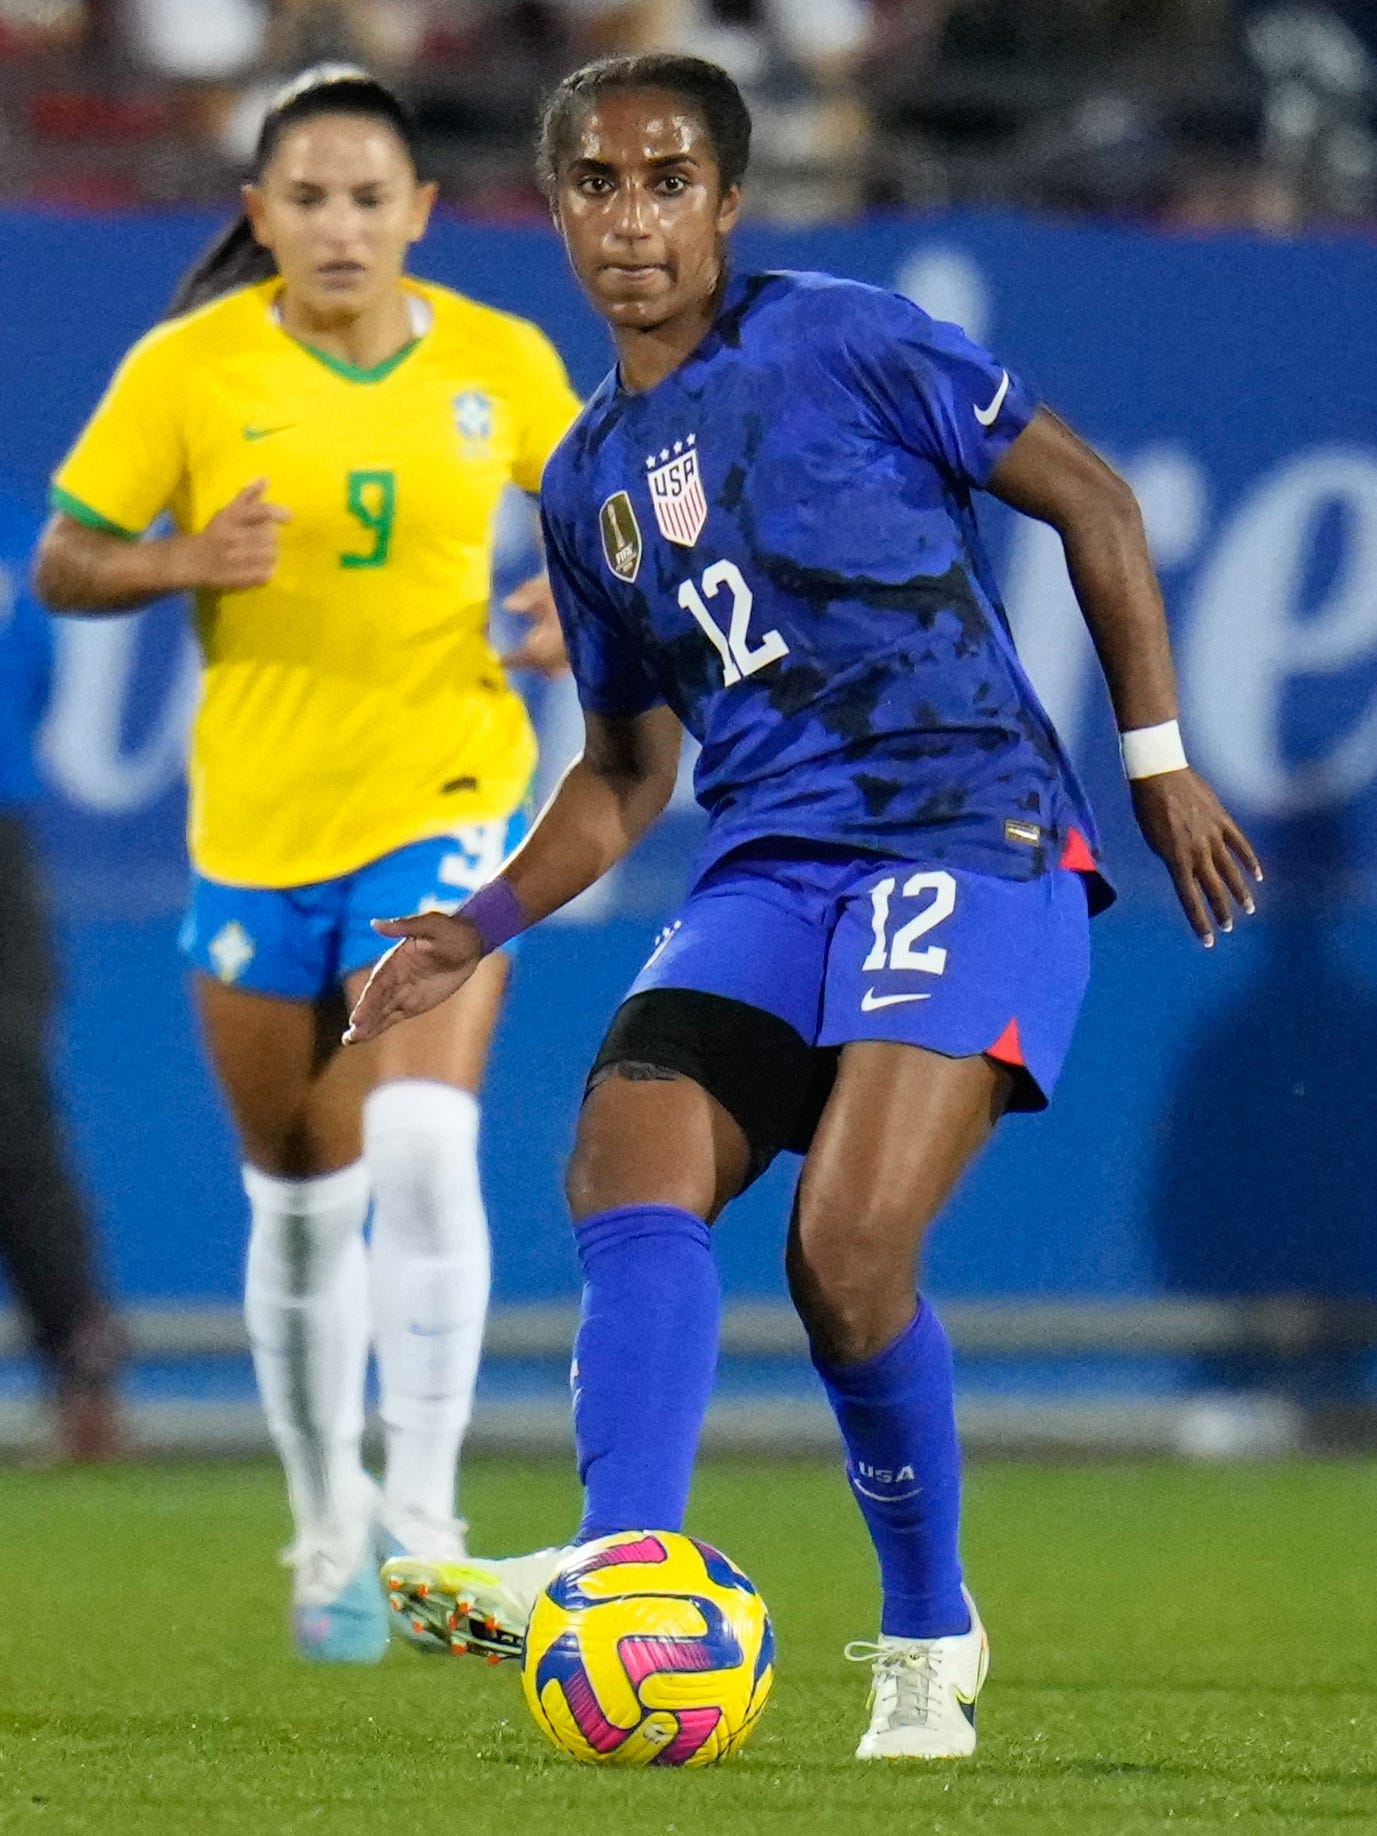 An action image of Naomi Girma playing soccer.